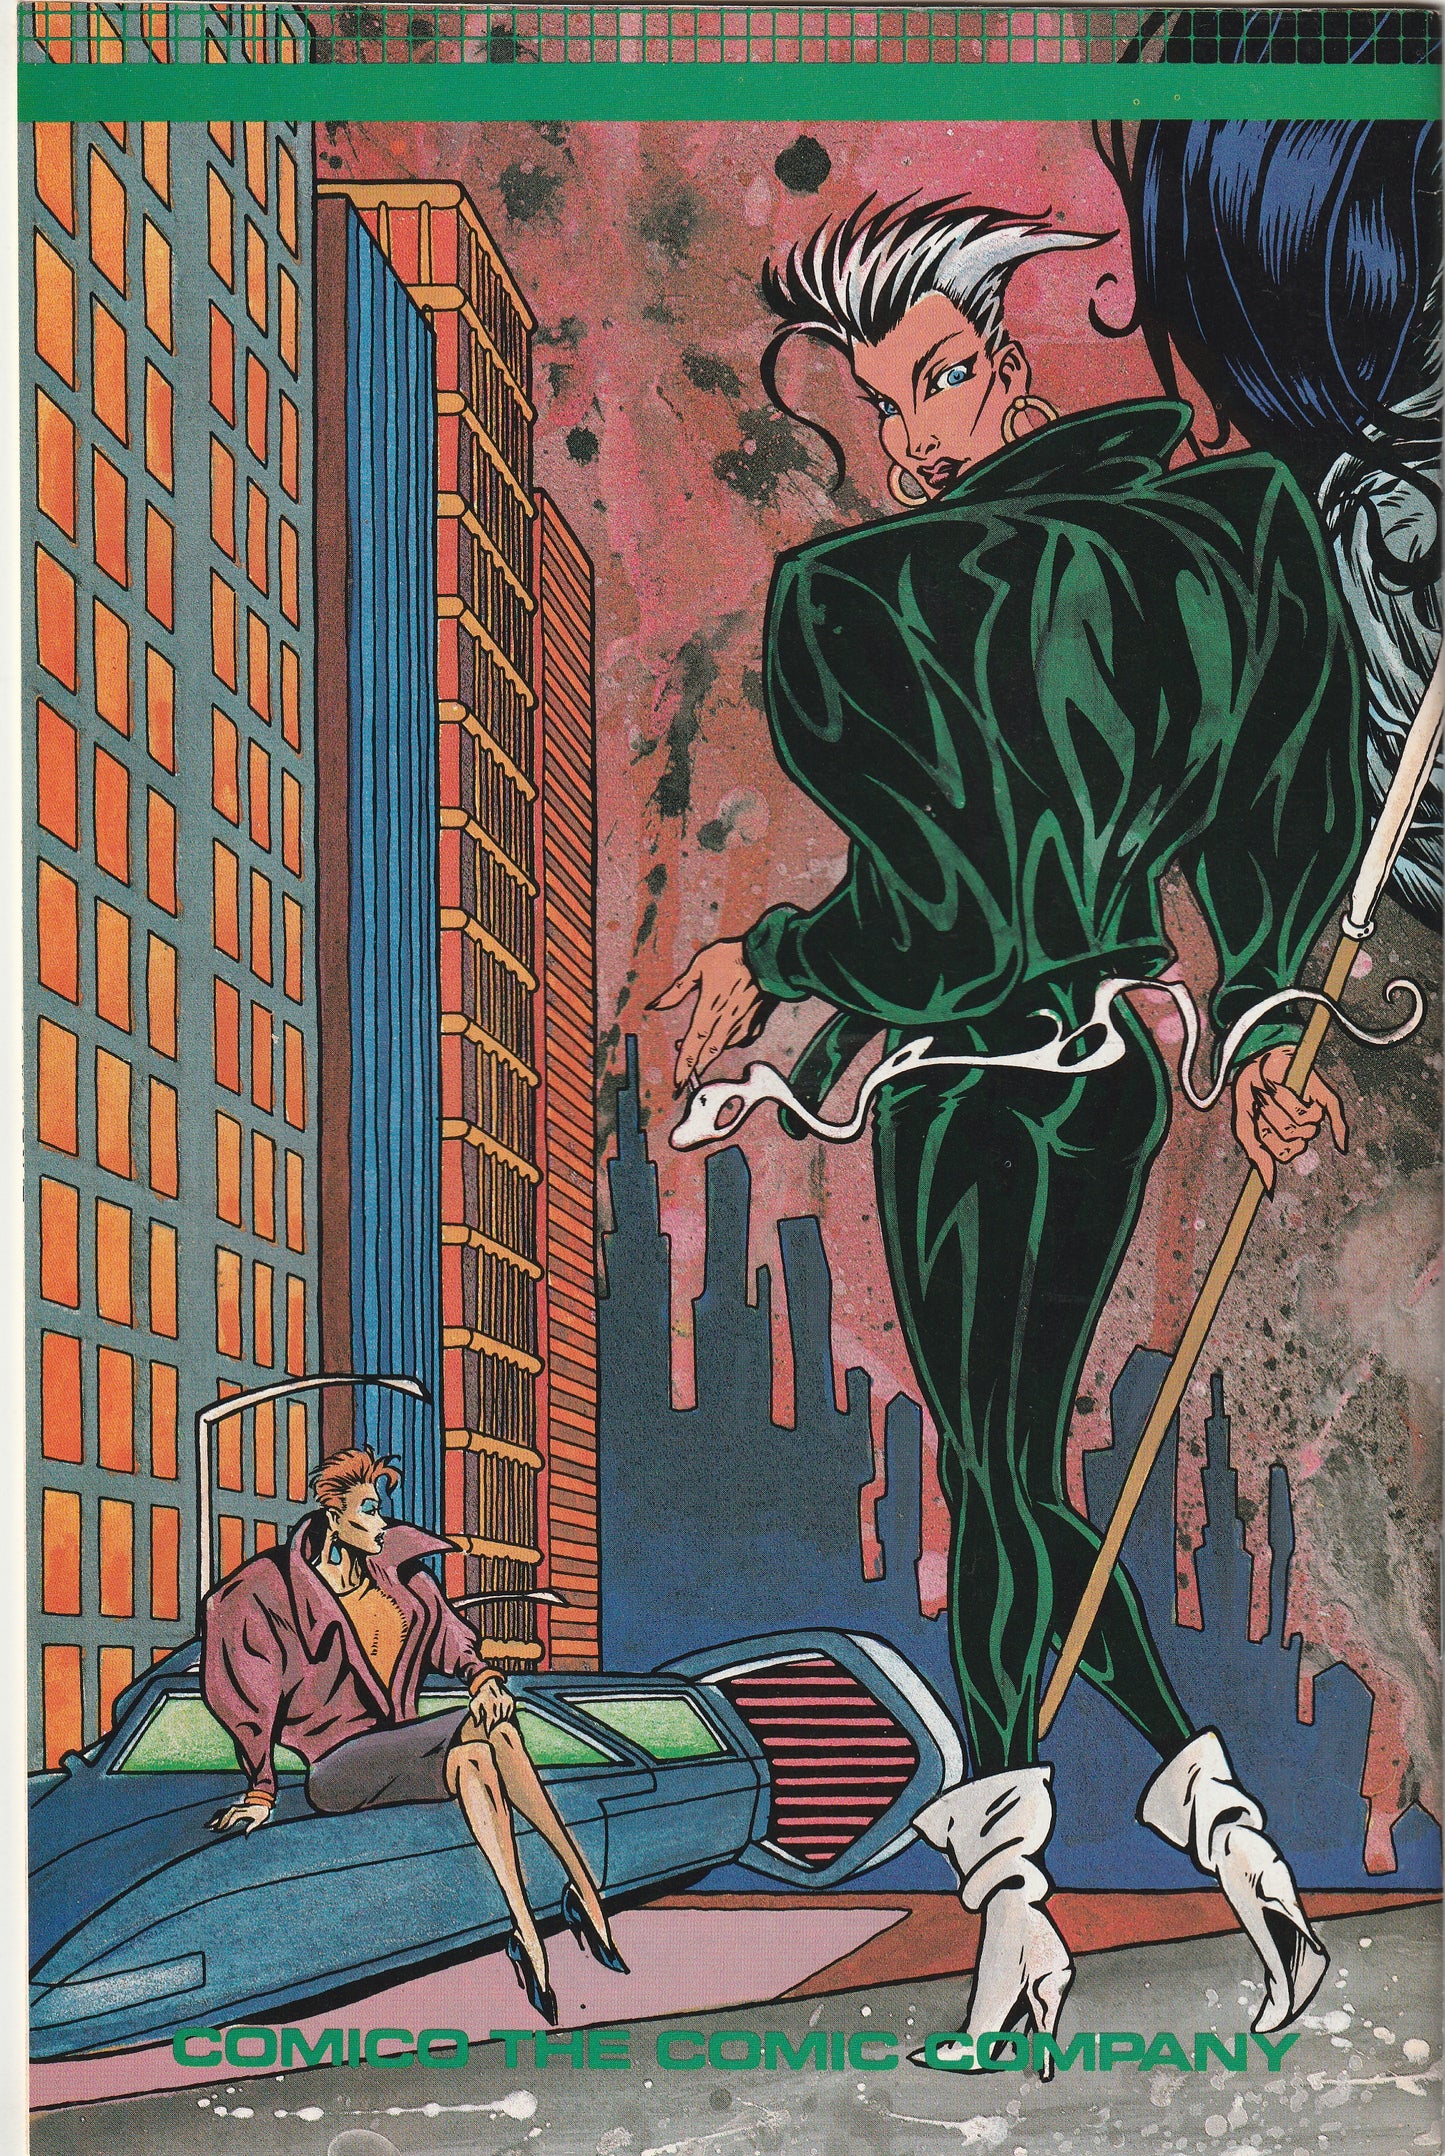 Grendel #10 (1987)